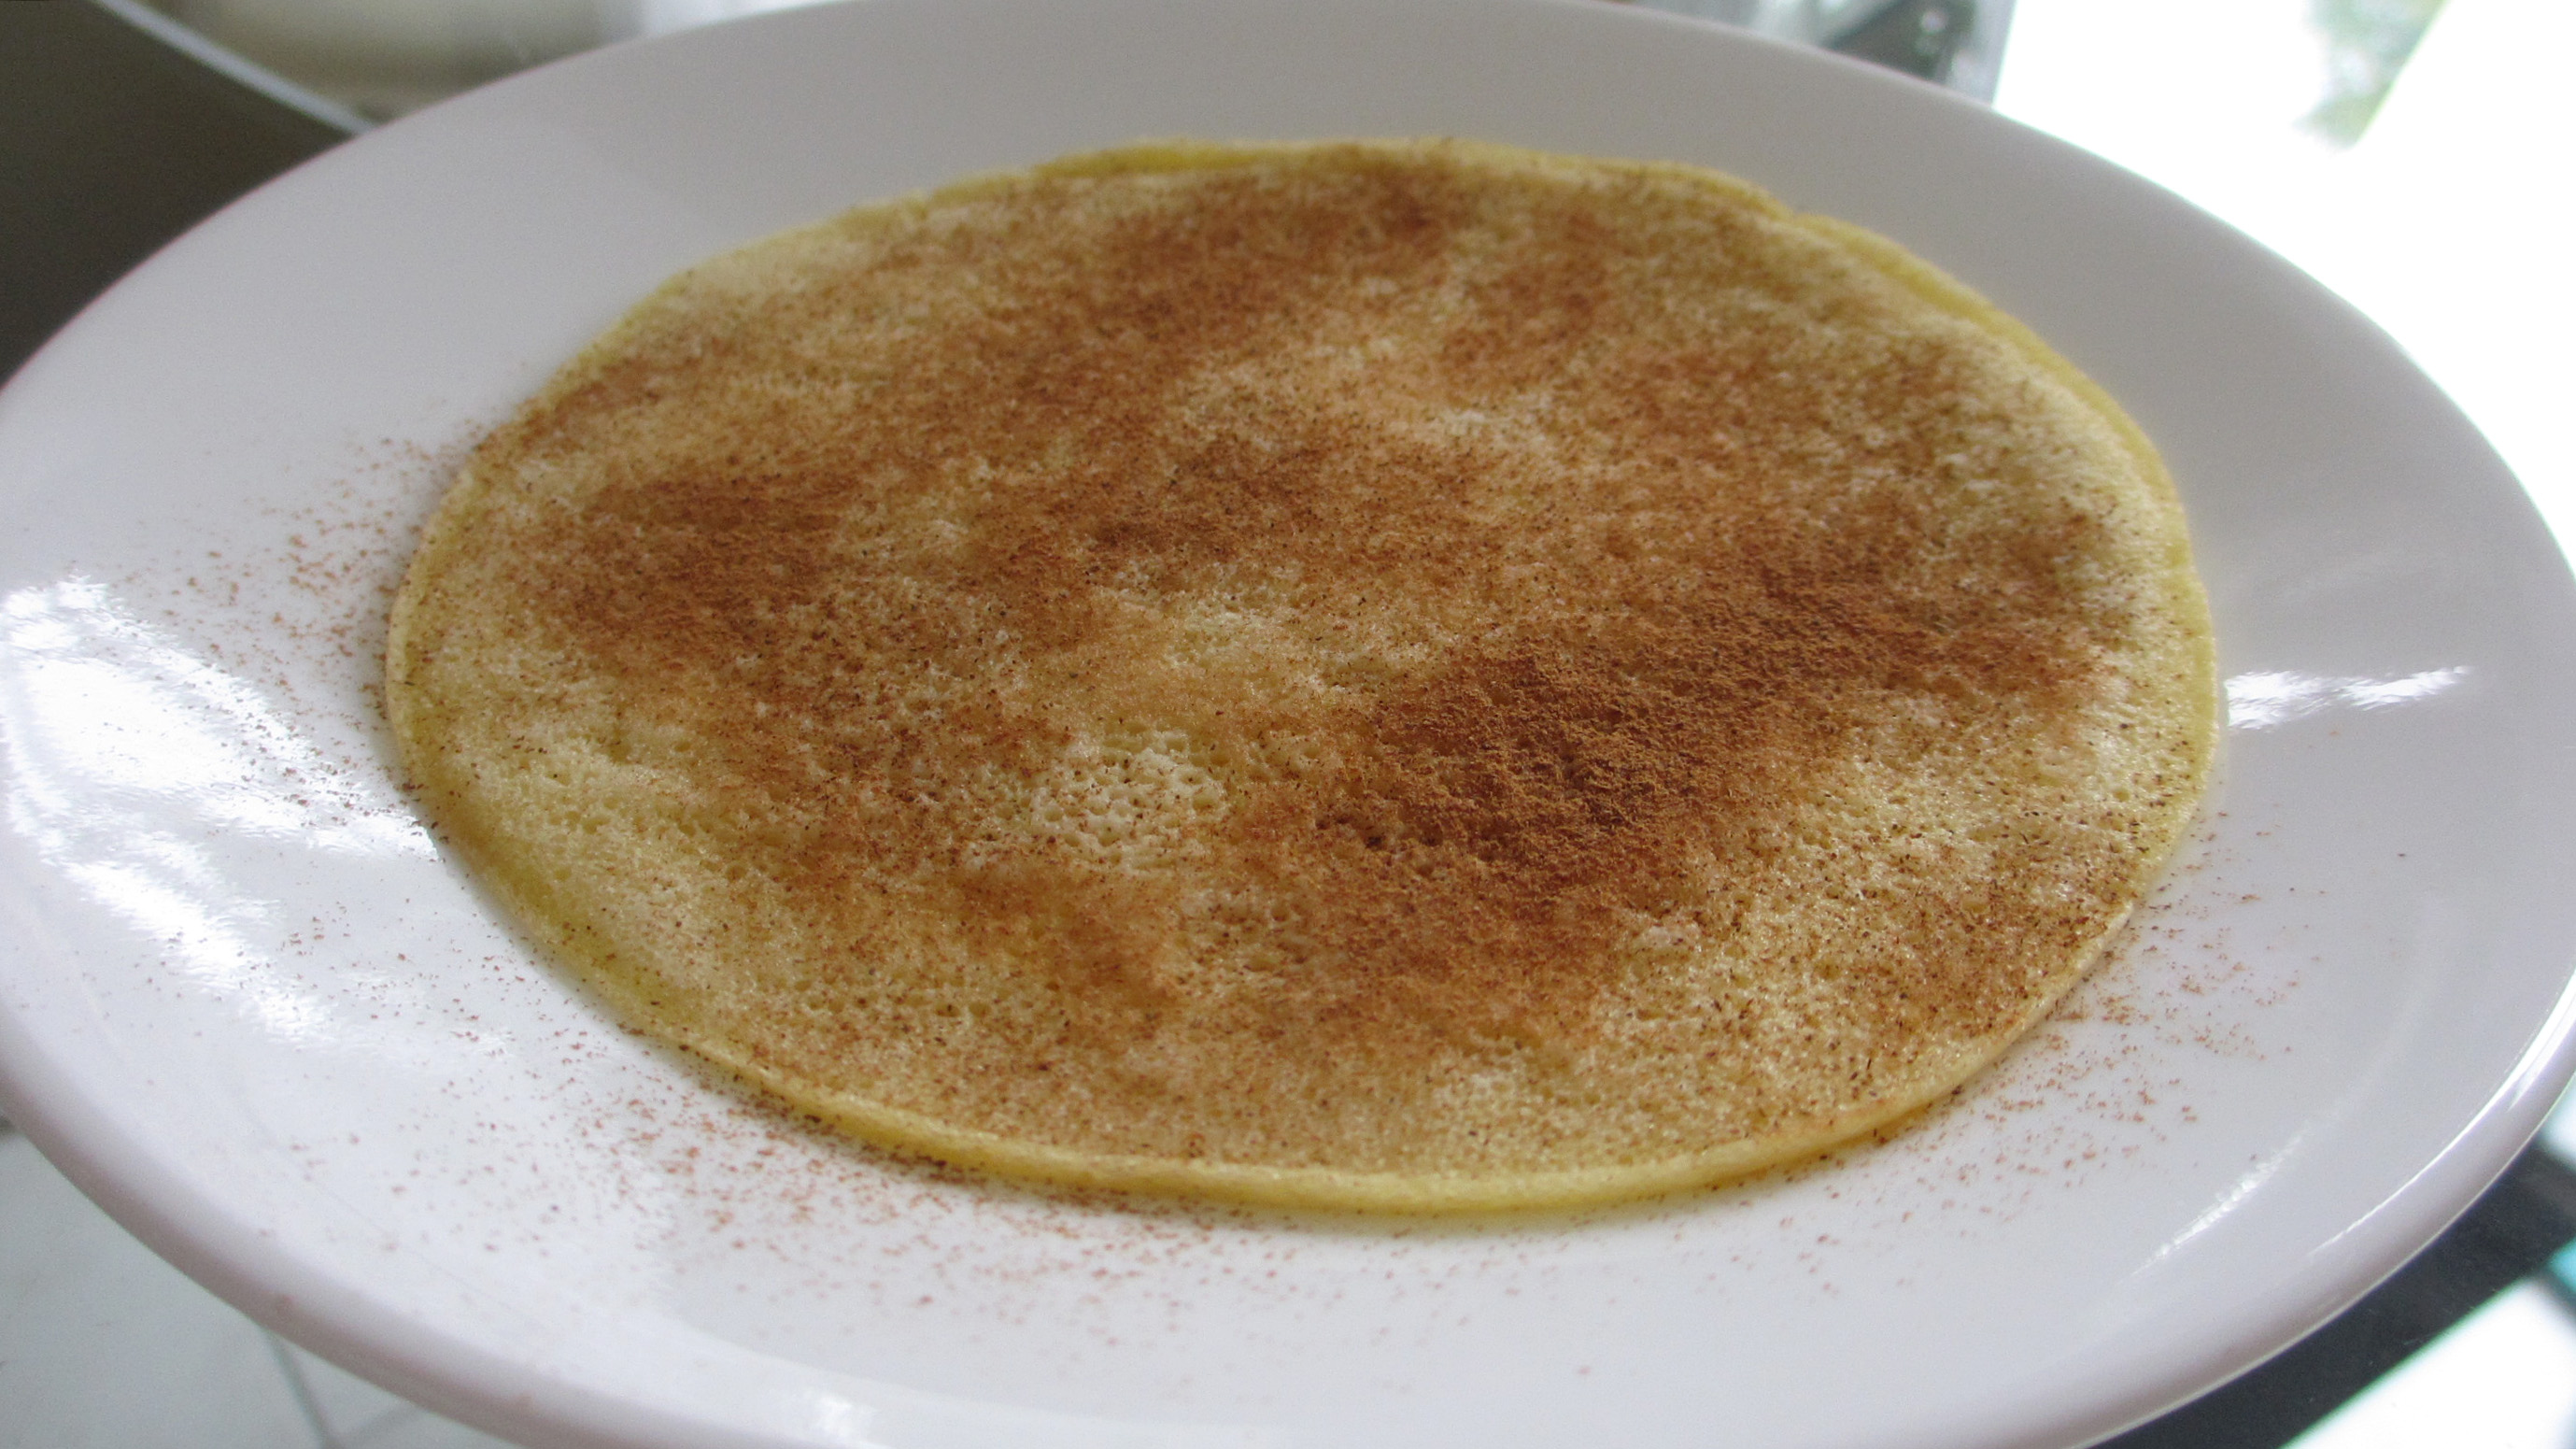 Pancake with Cinnamon